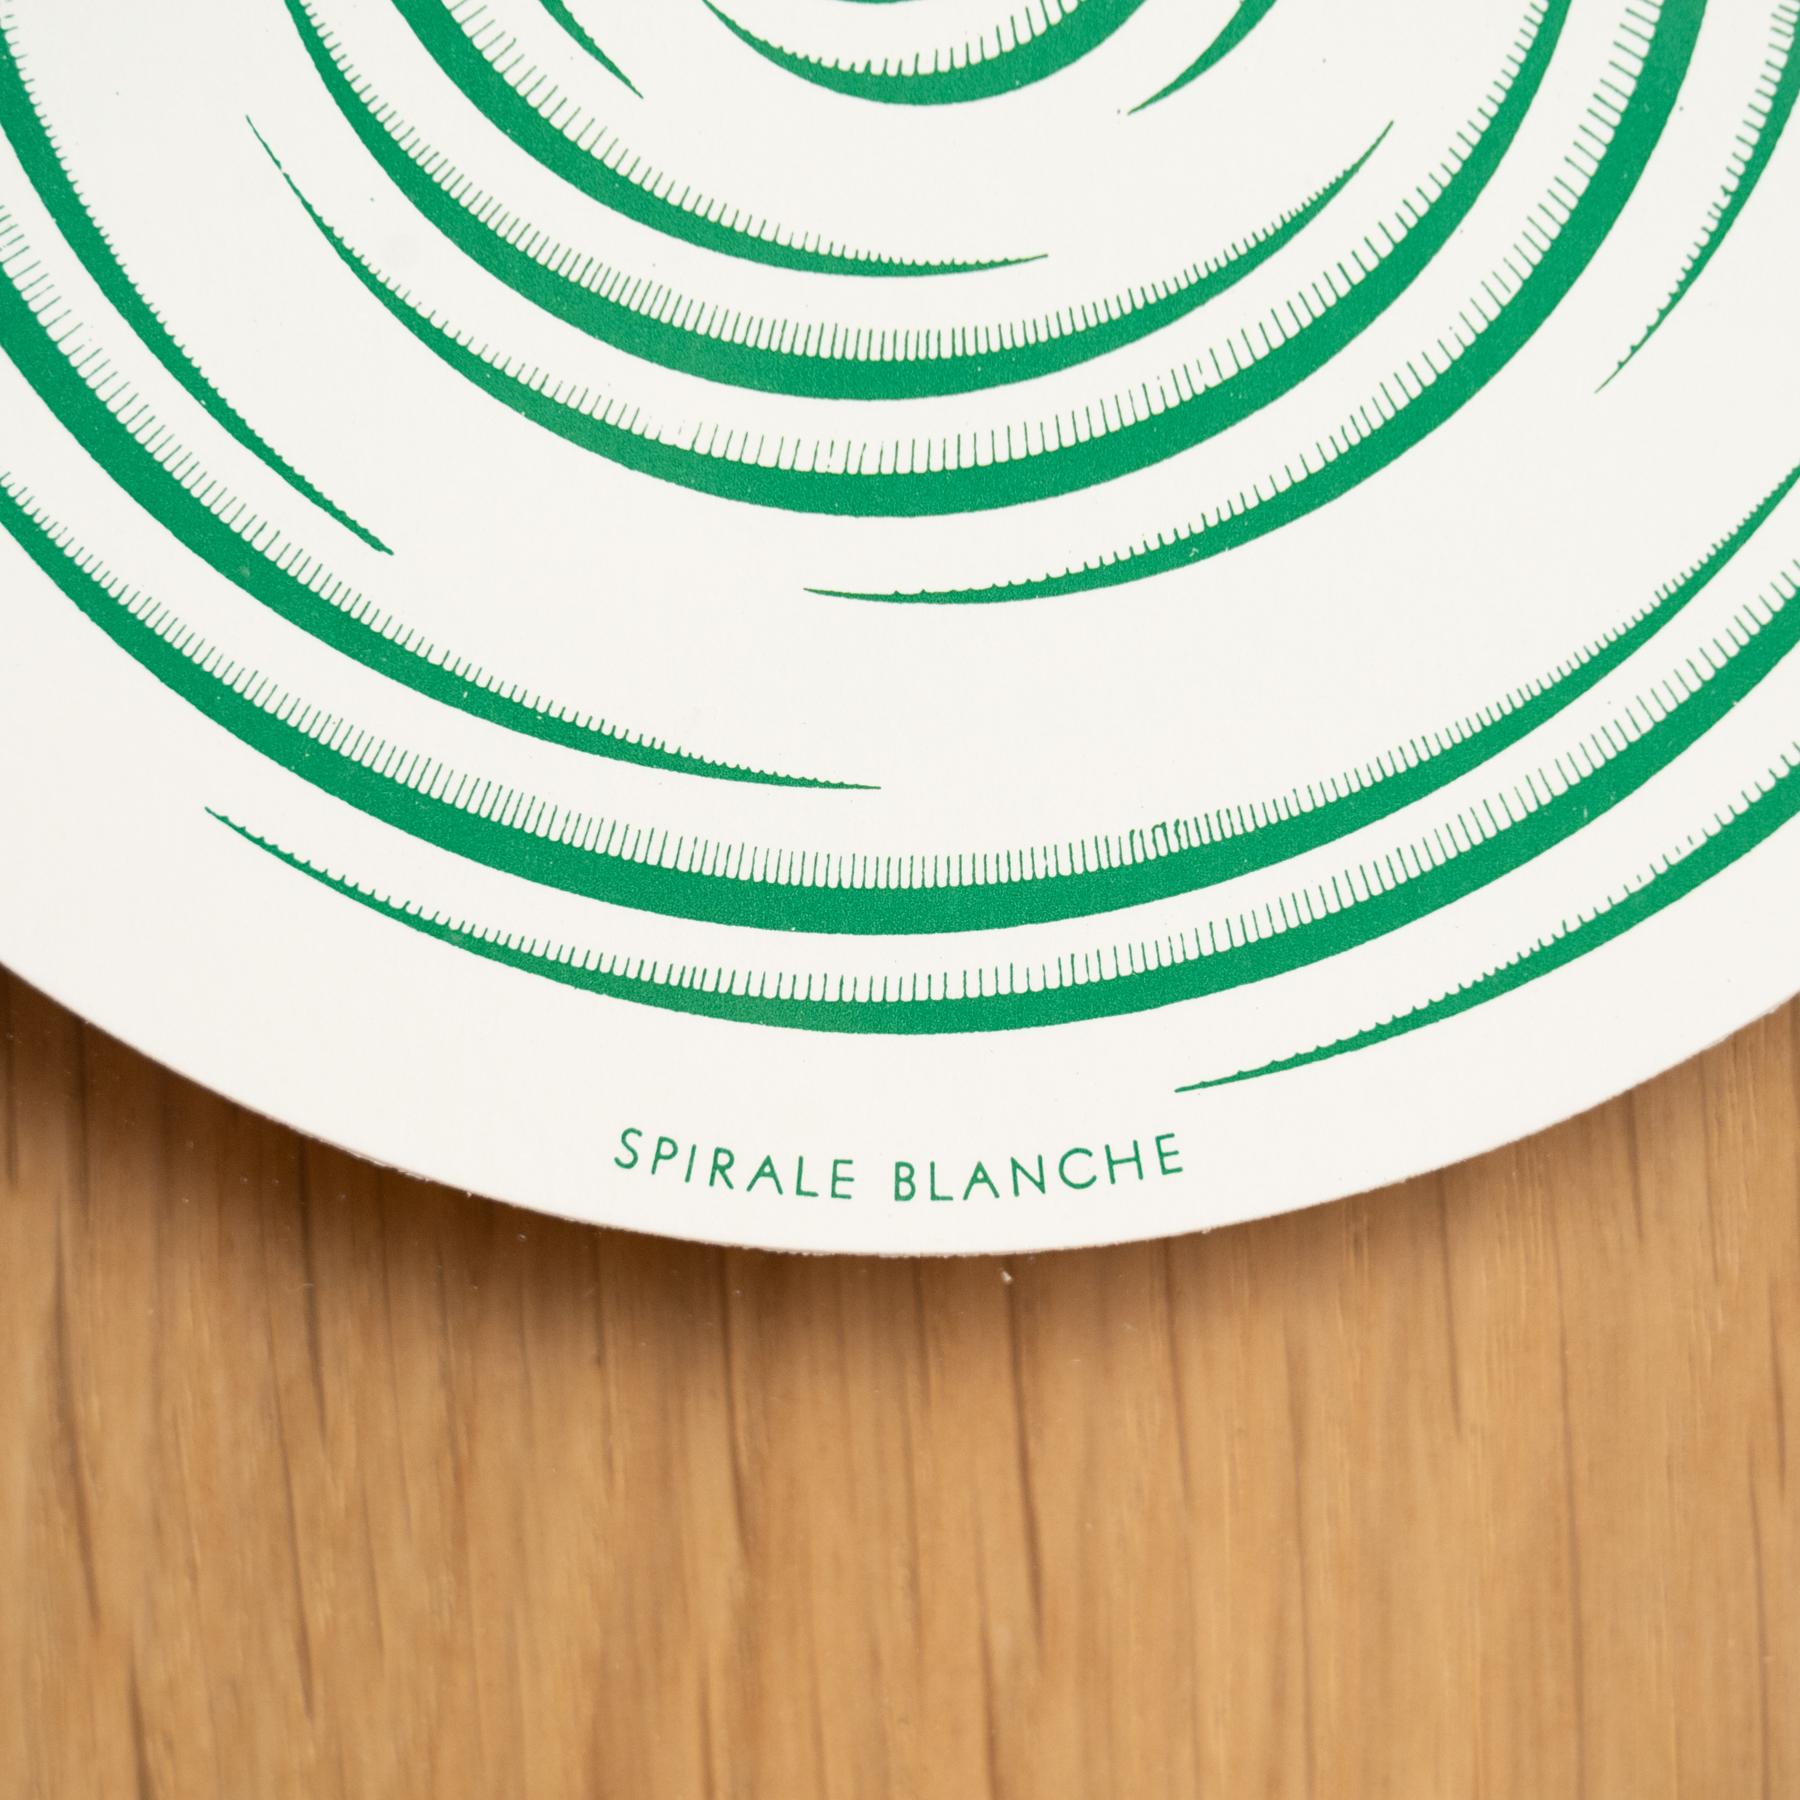 Paper Marcel Duchamp Green White Spirale Blanche Rotorelief by Konig Series 133, 1987 For Sale